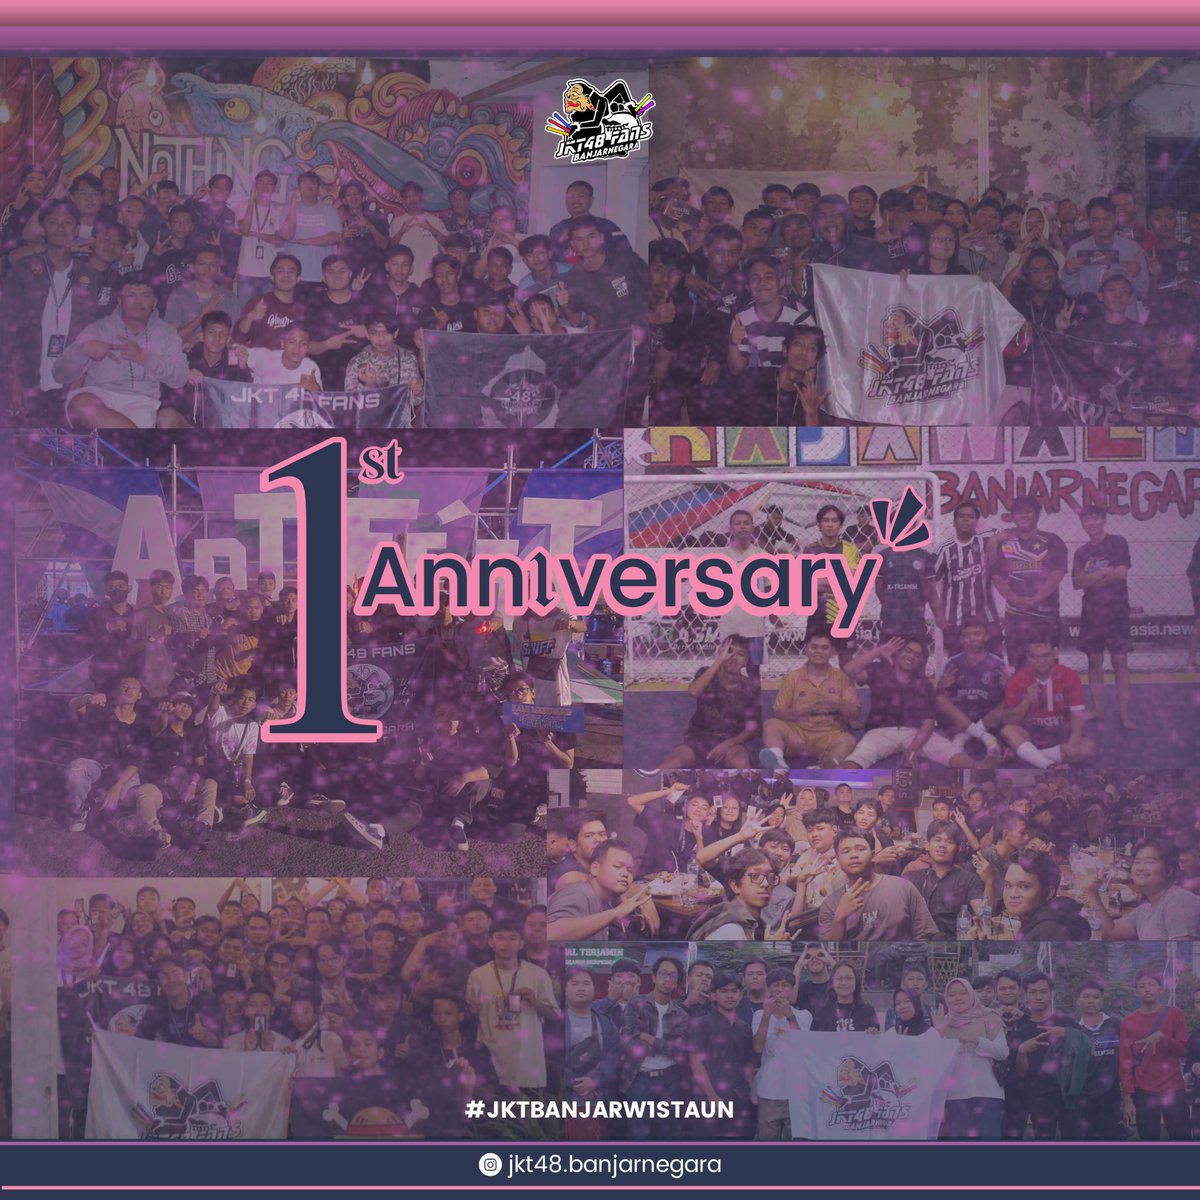 Happy anniversary @48banjarnegara 
#JKTBANJARW1STAUN